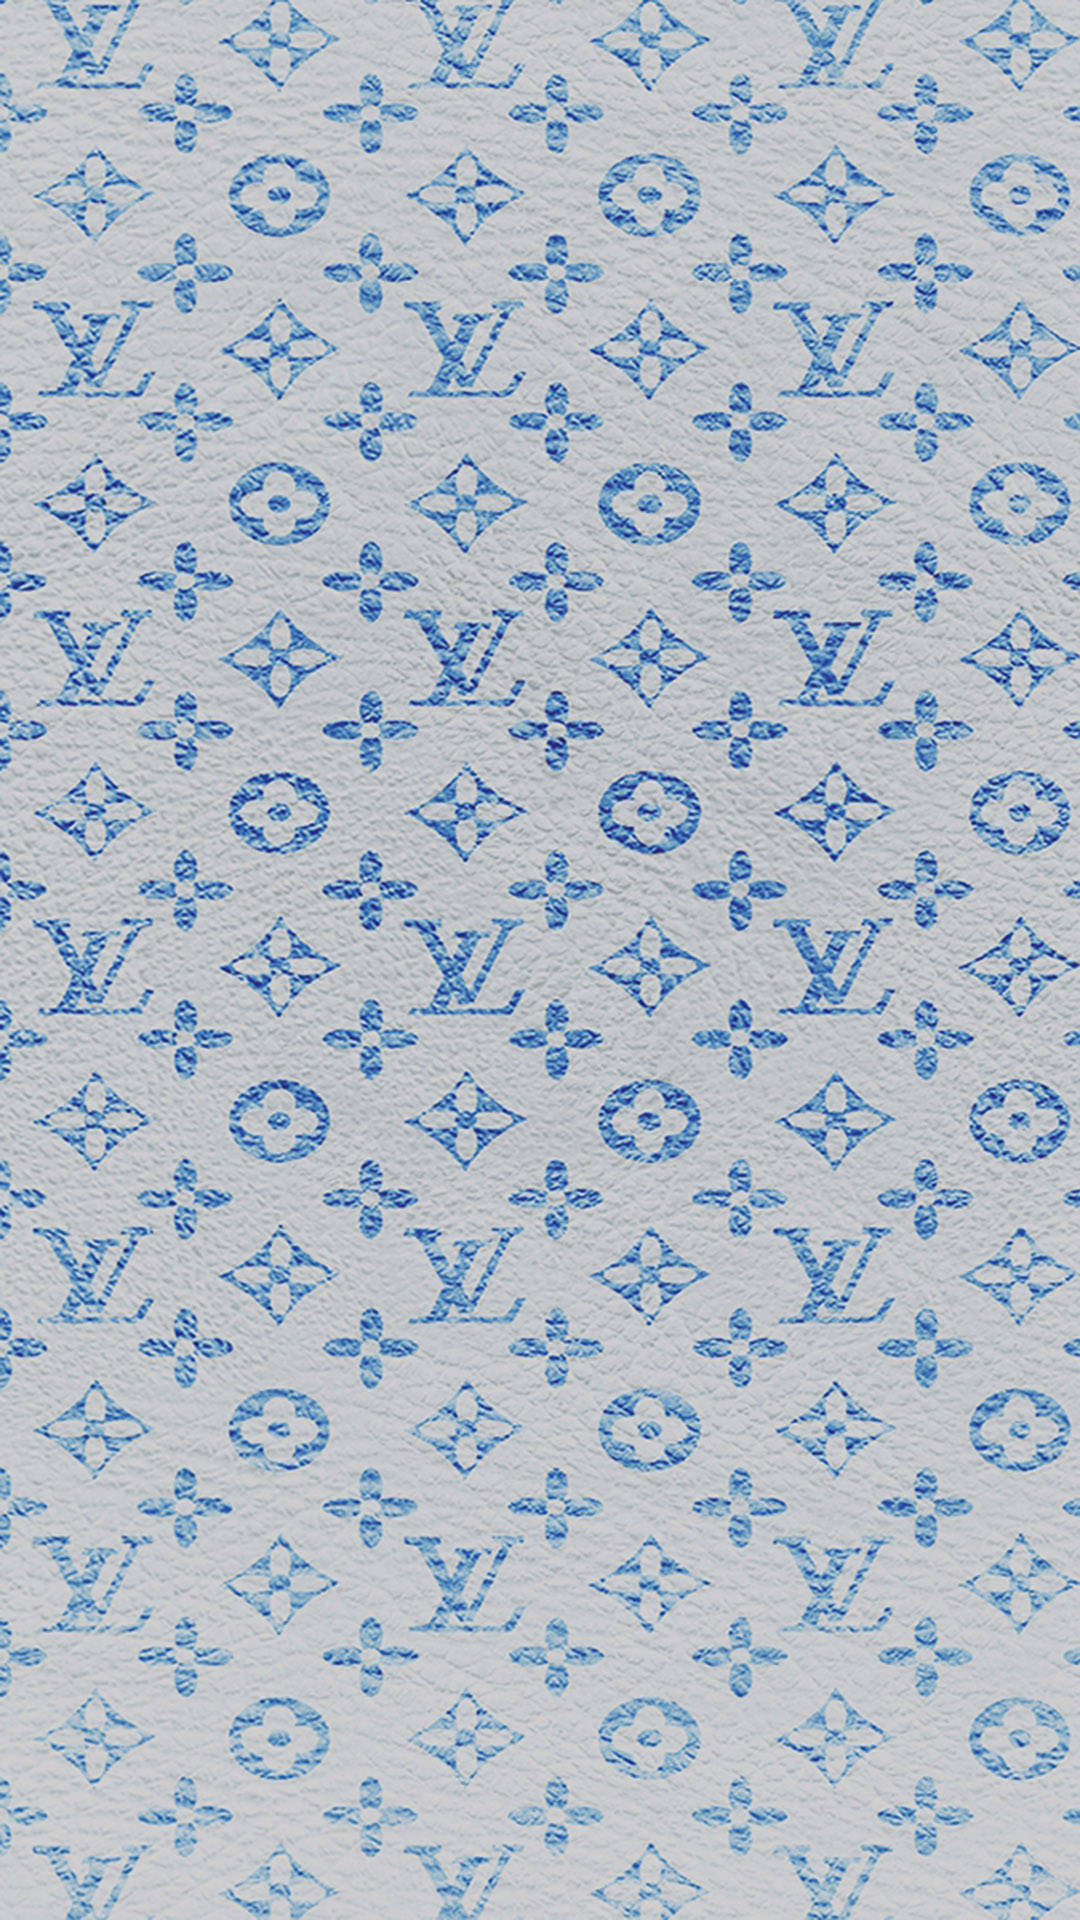 Blue Leather Louis Vuitton Phone Wallpaper